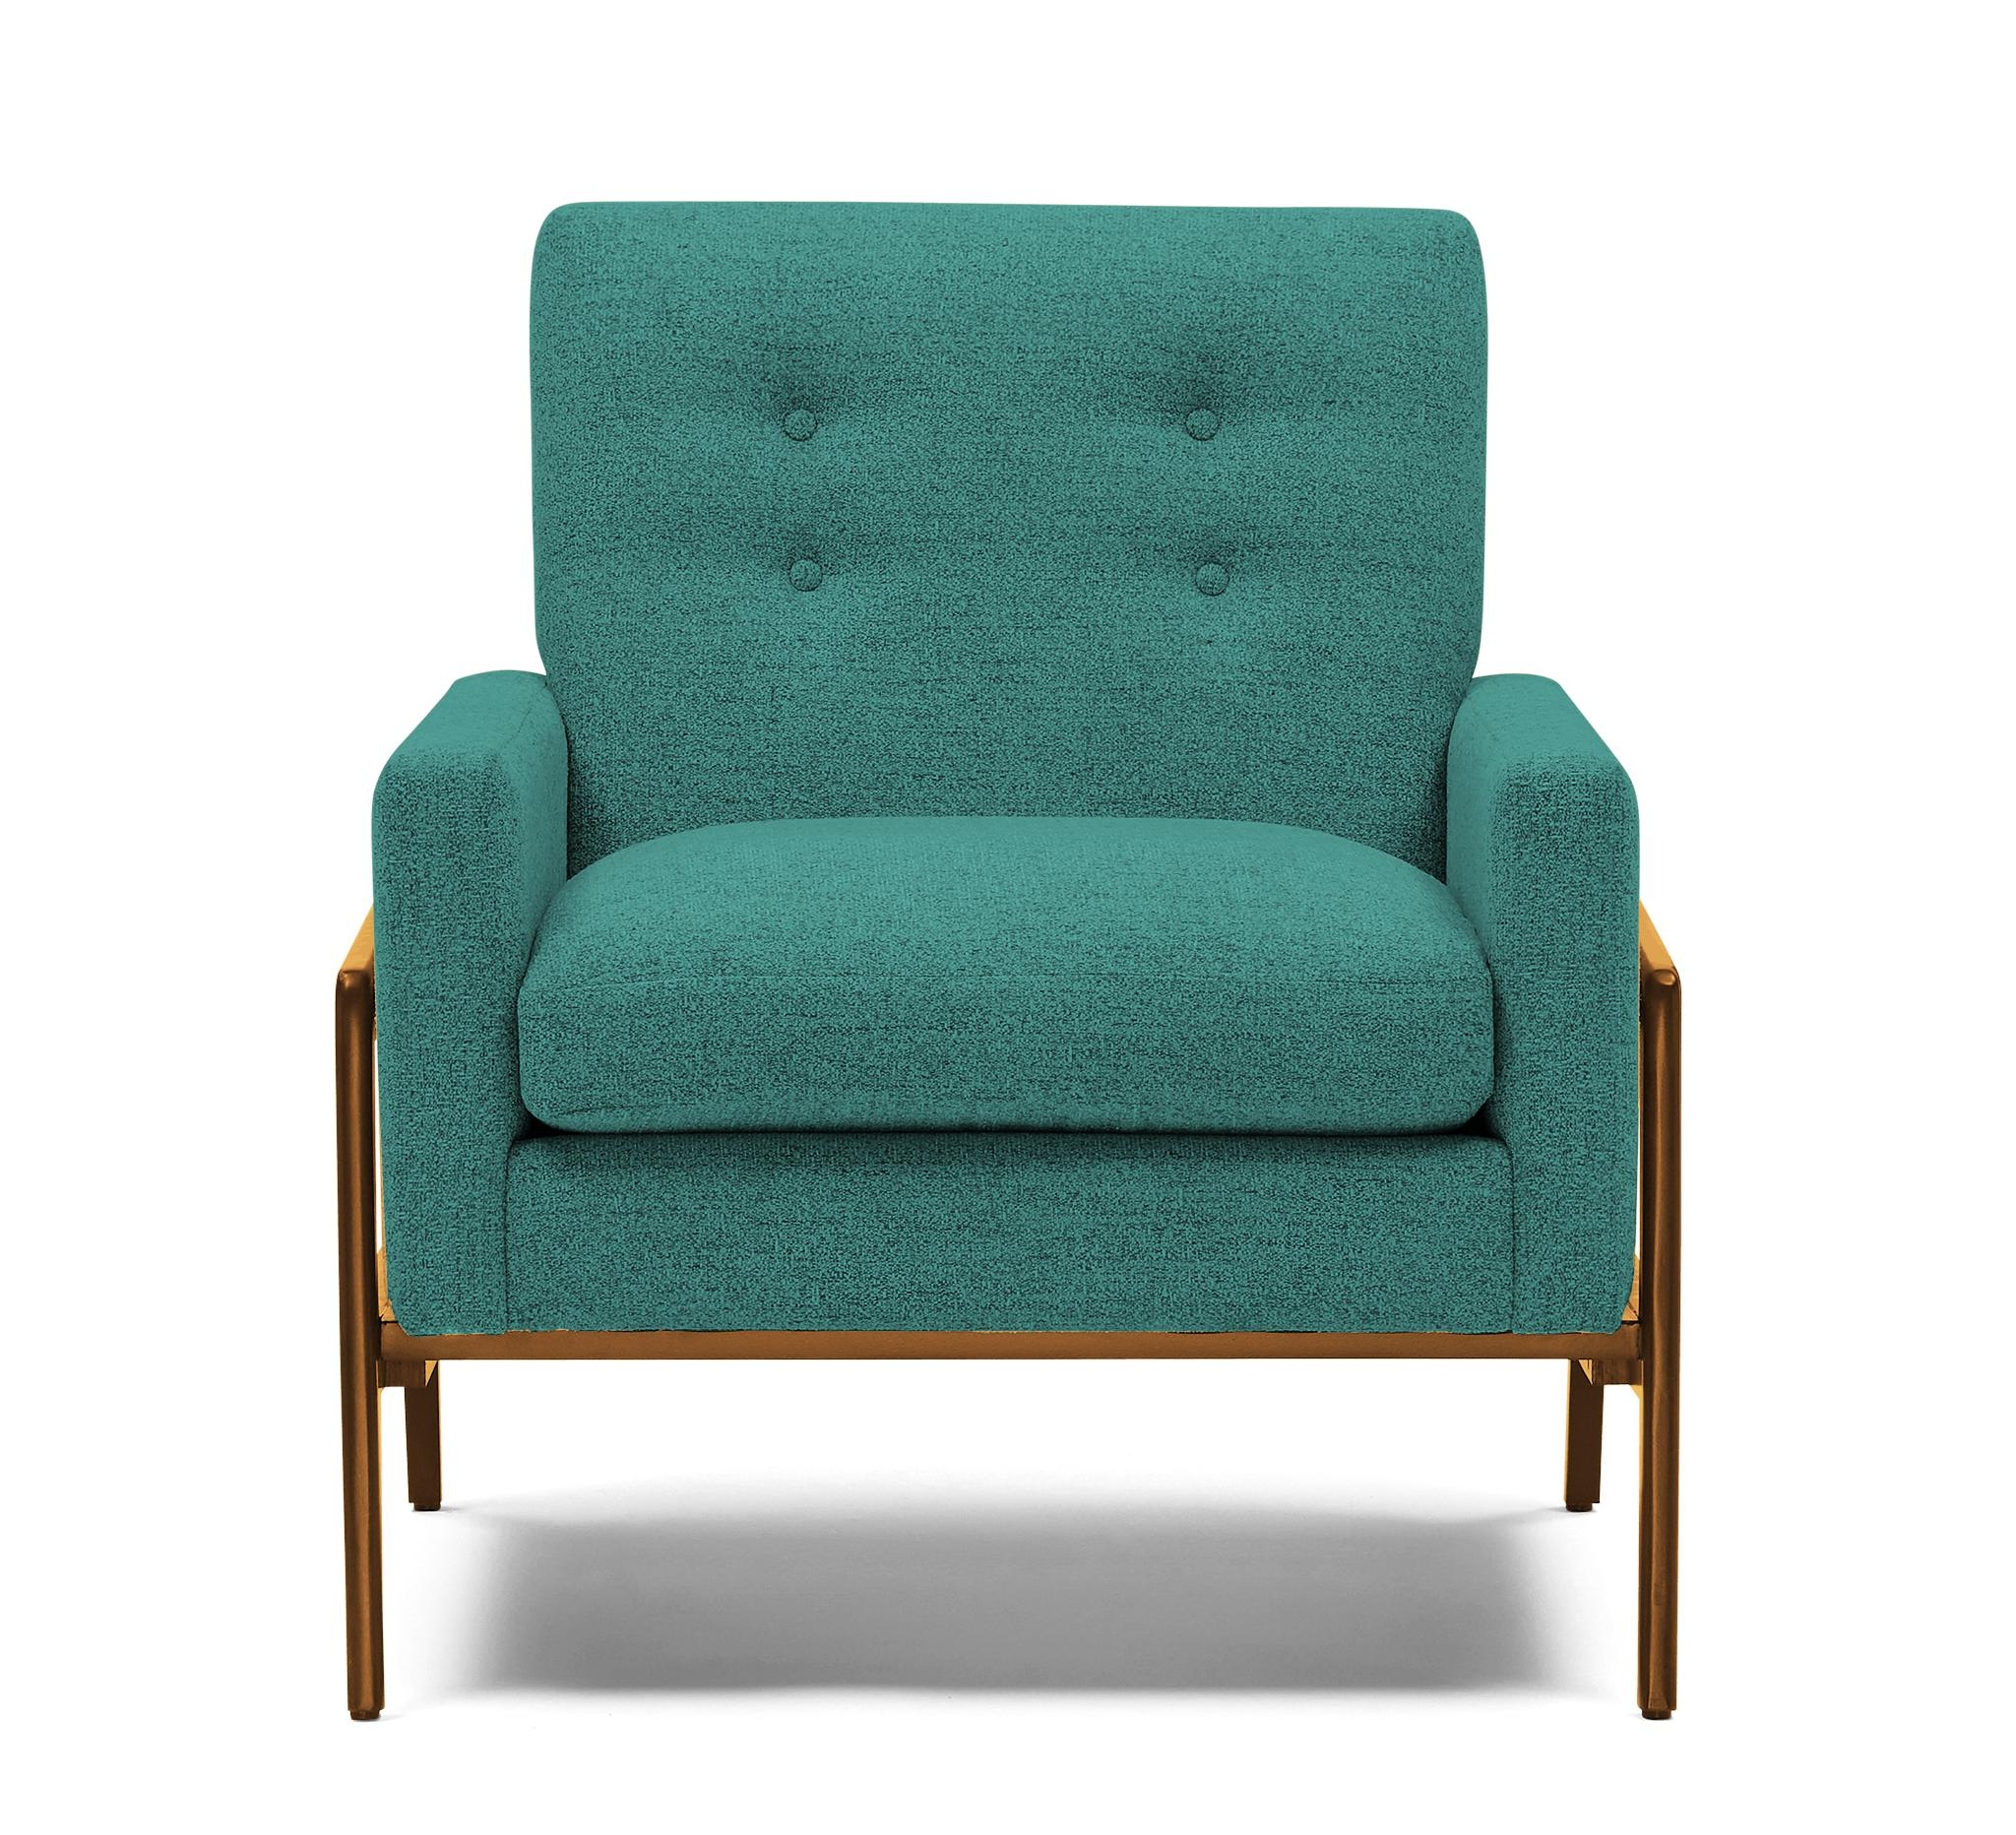 Green Clyde Mid Century Modern Chair - Essence Aqua - Mocha - Image 0